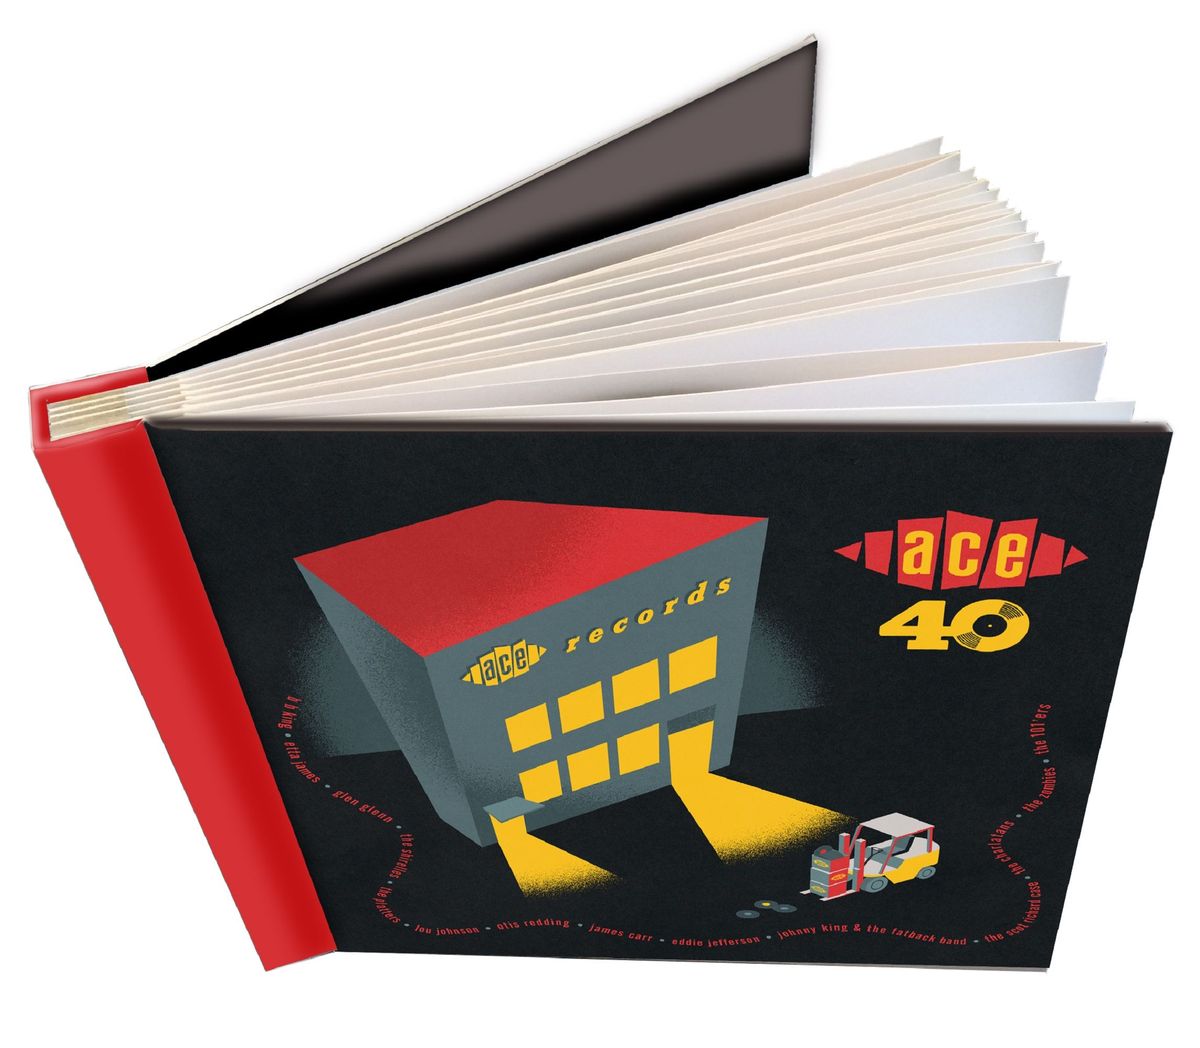 DD Rio 40 Anniversary Box Set. Single box